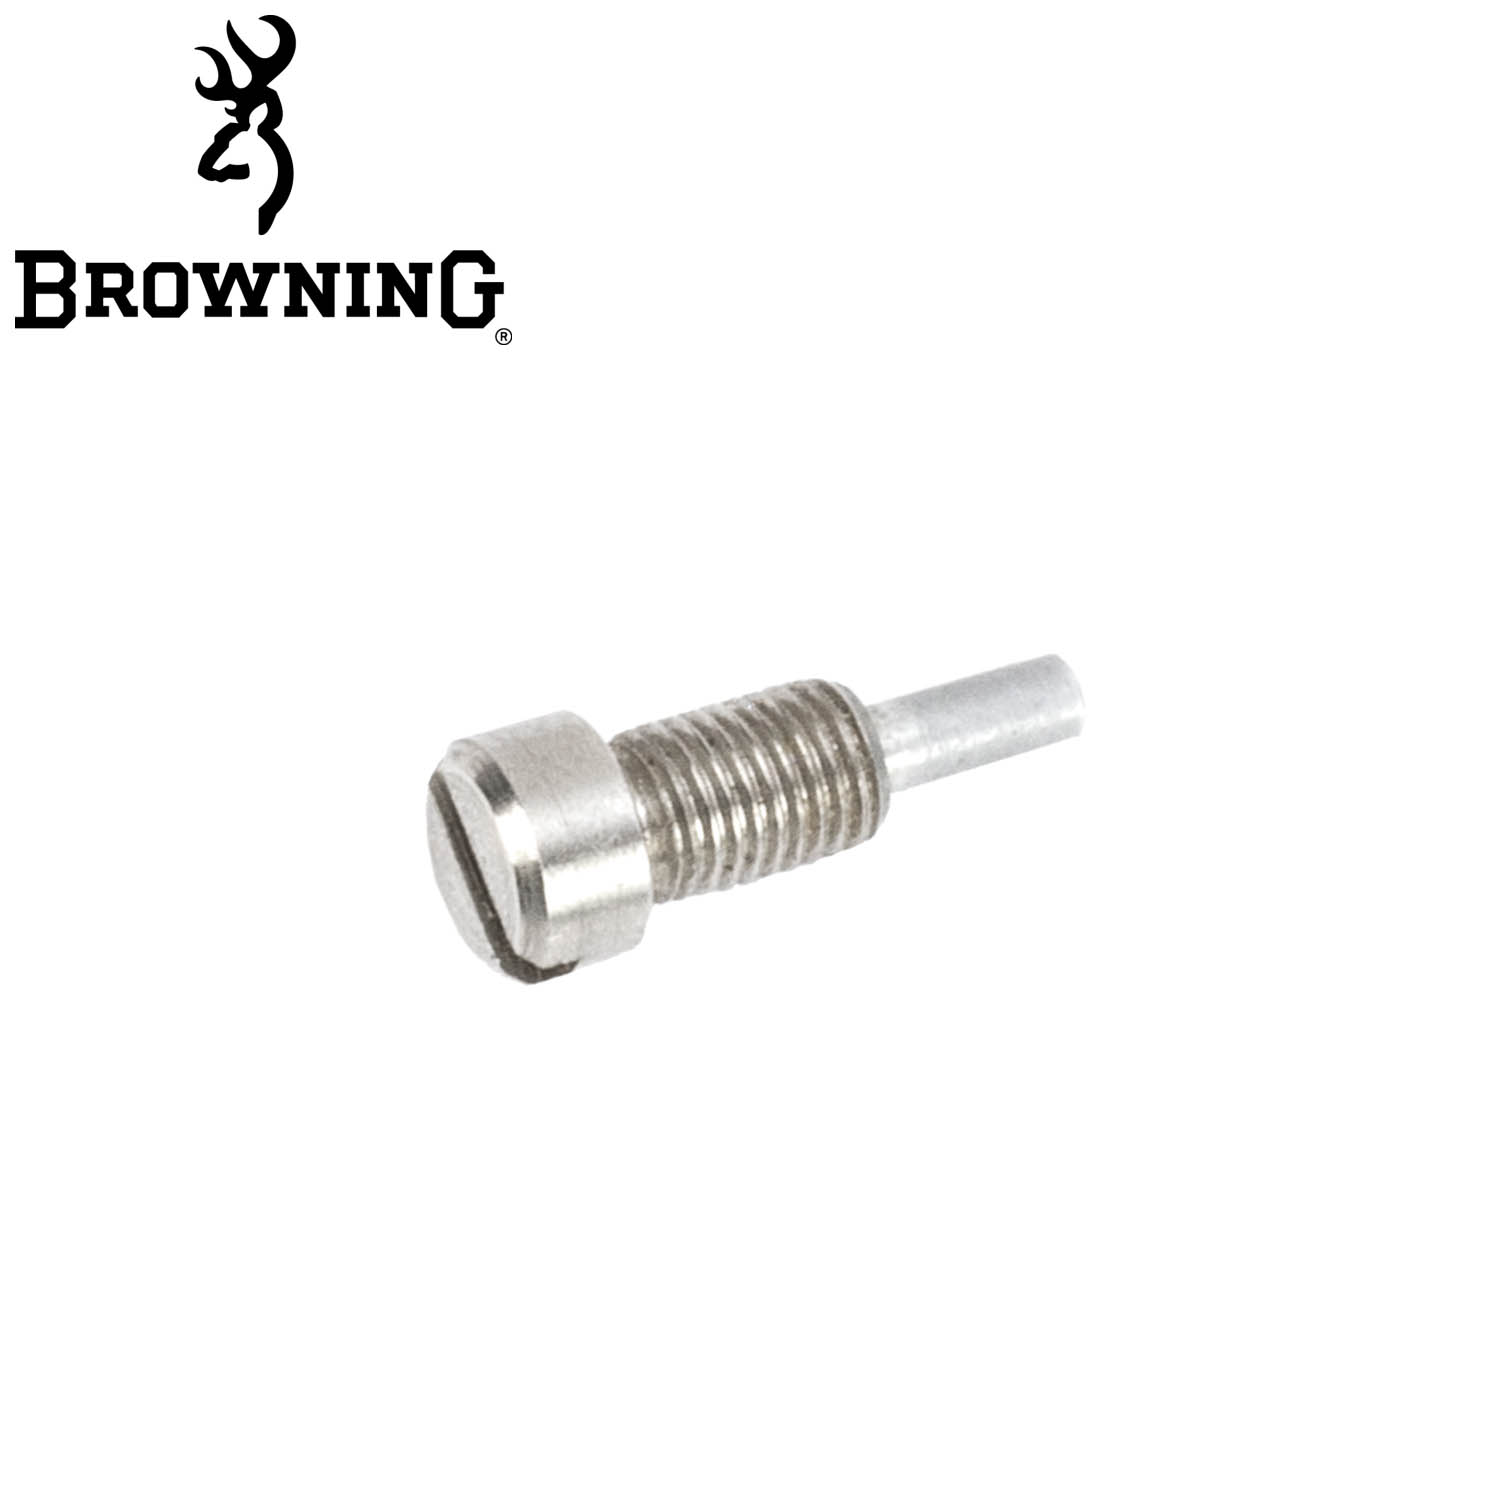 7mm gas regulator Browning BAR model 